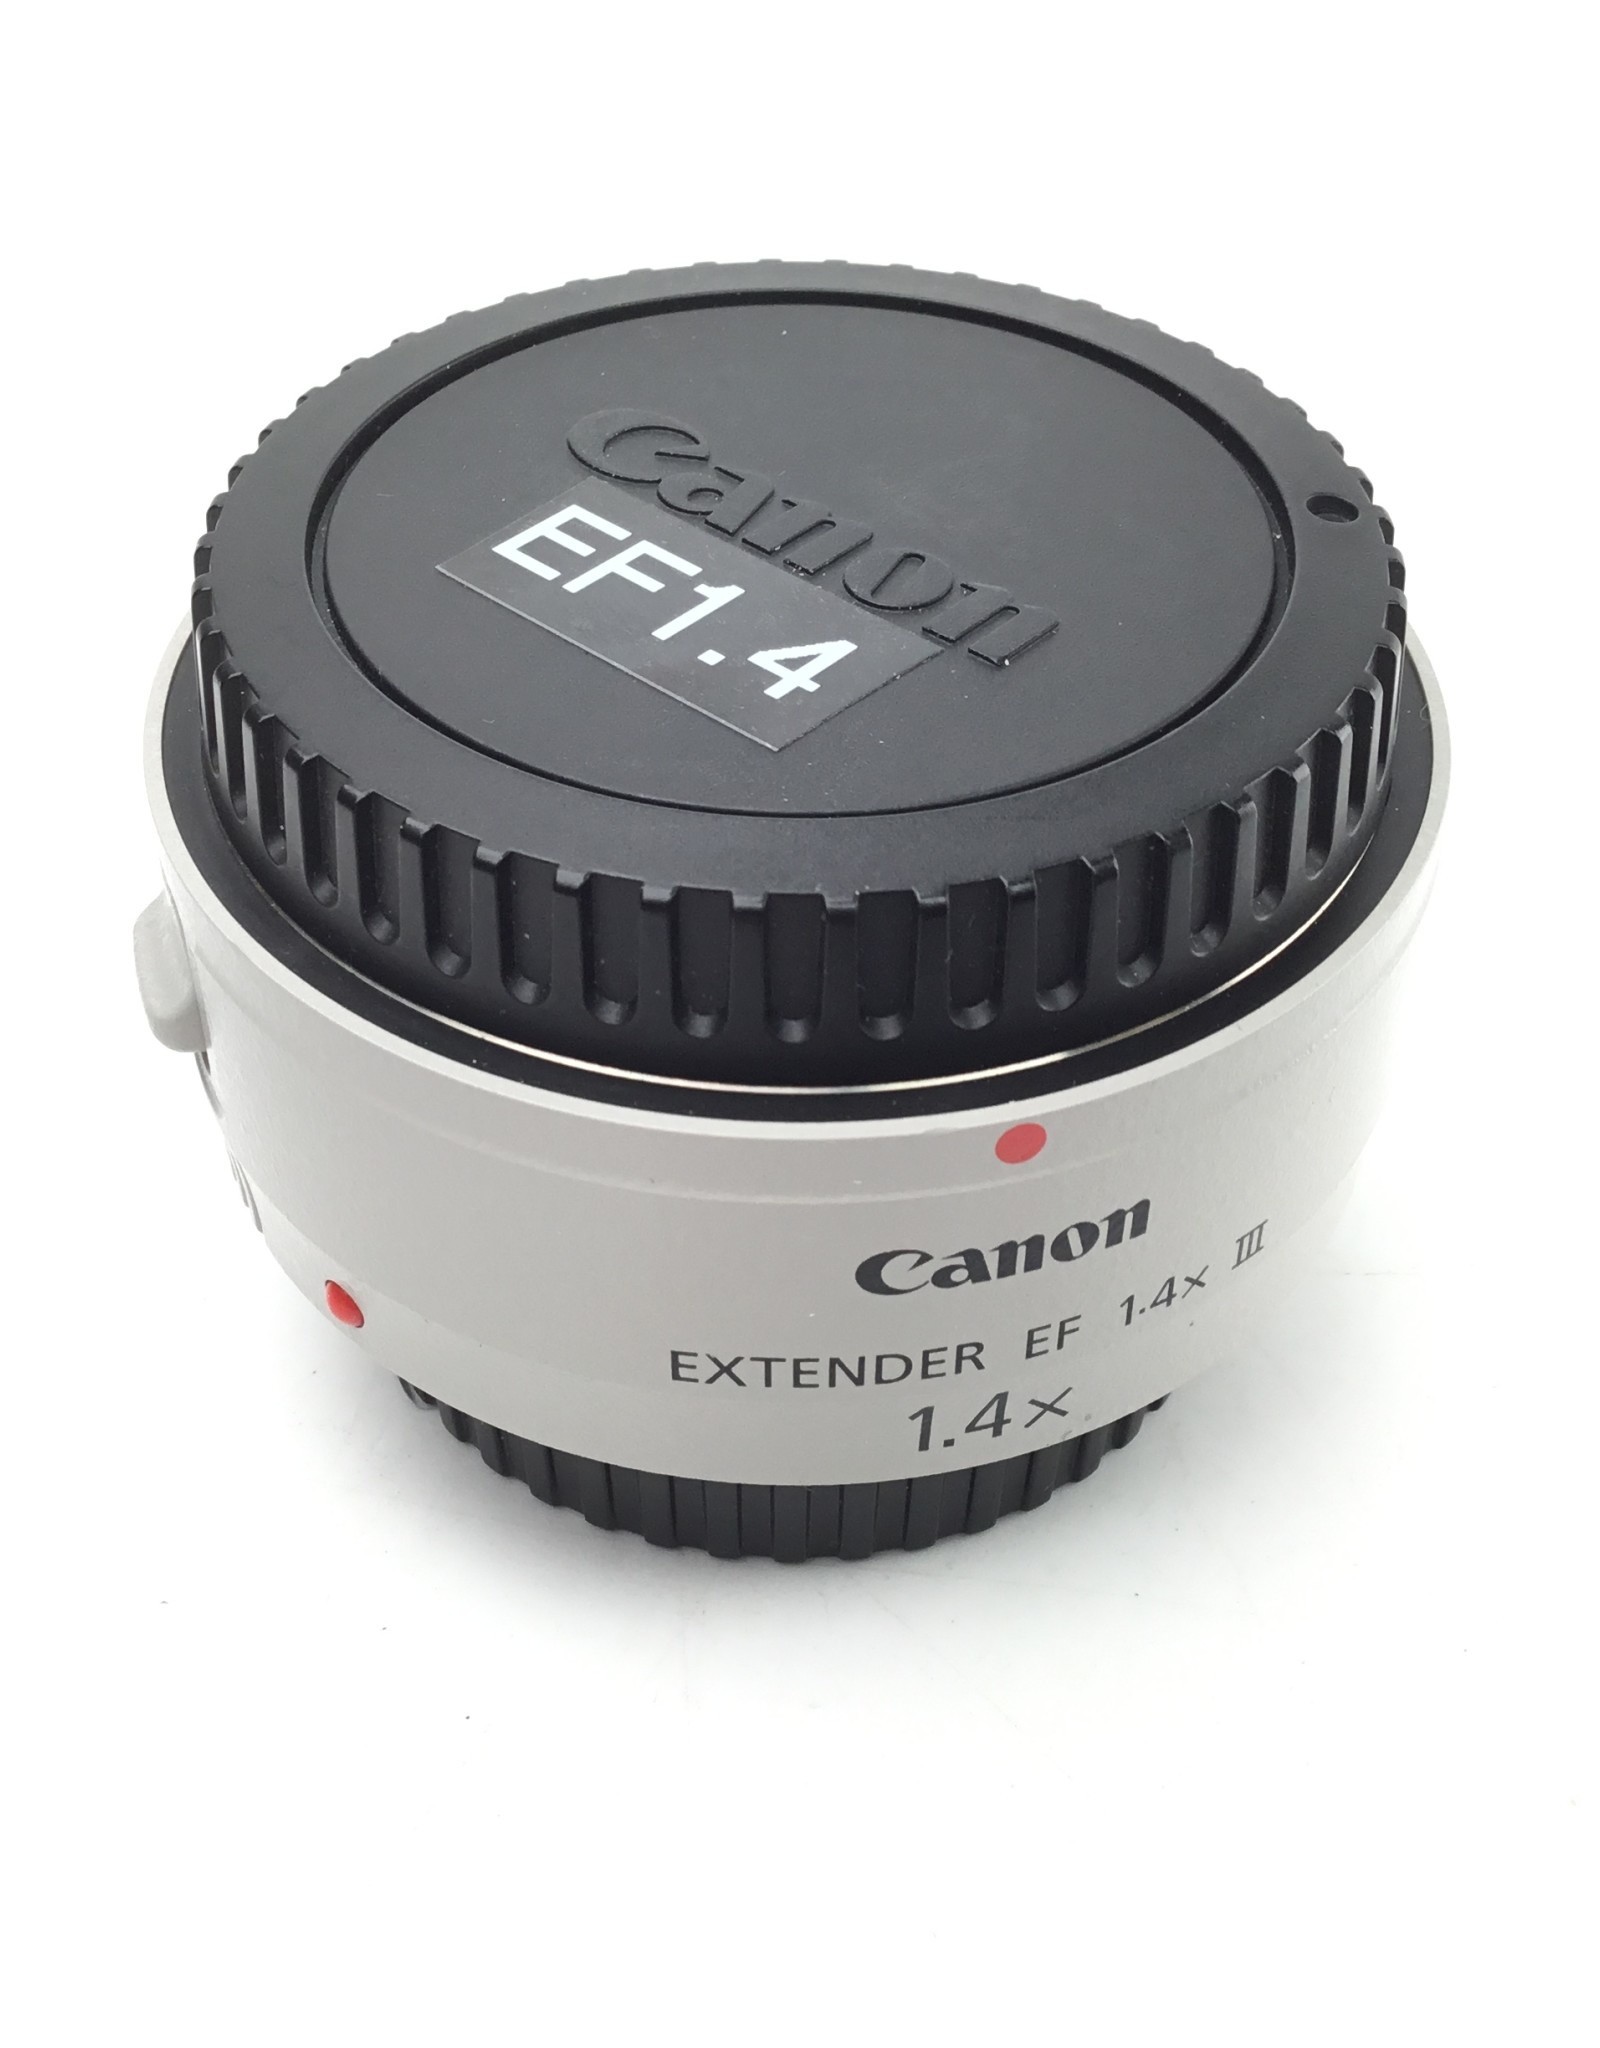 CANON Canon Extender EF 1.4X III Teleconverter Used EX